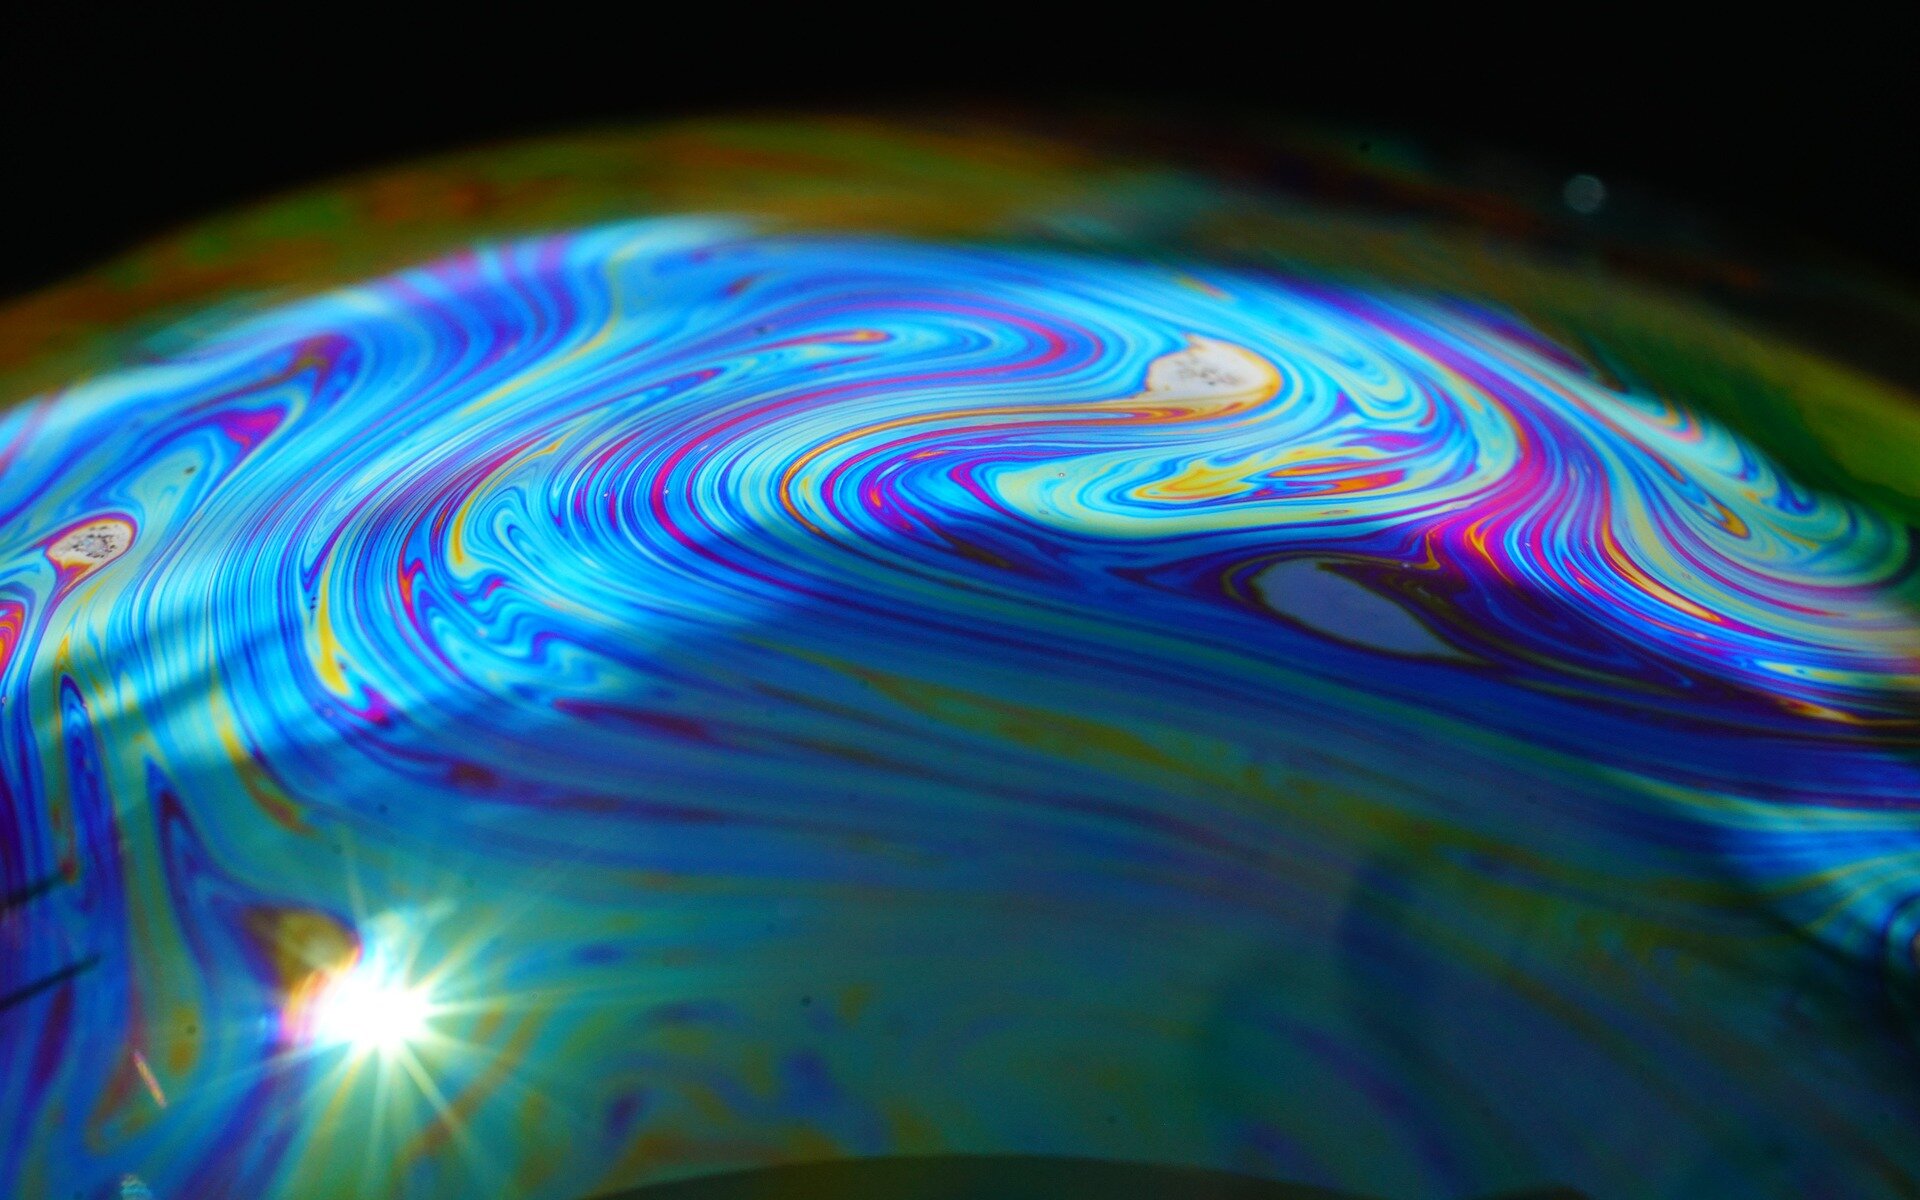 #Superfluids provide new insight into turbulence